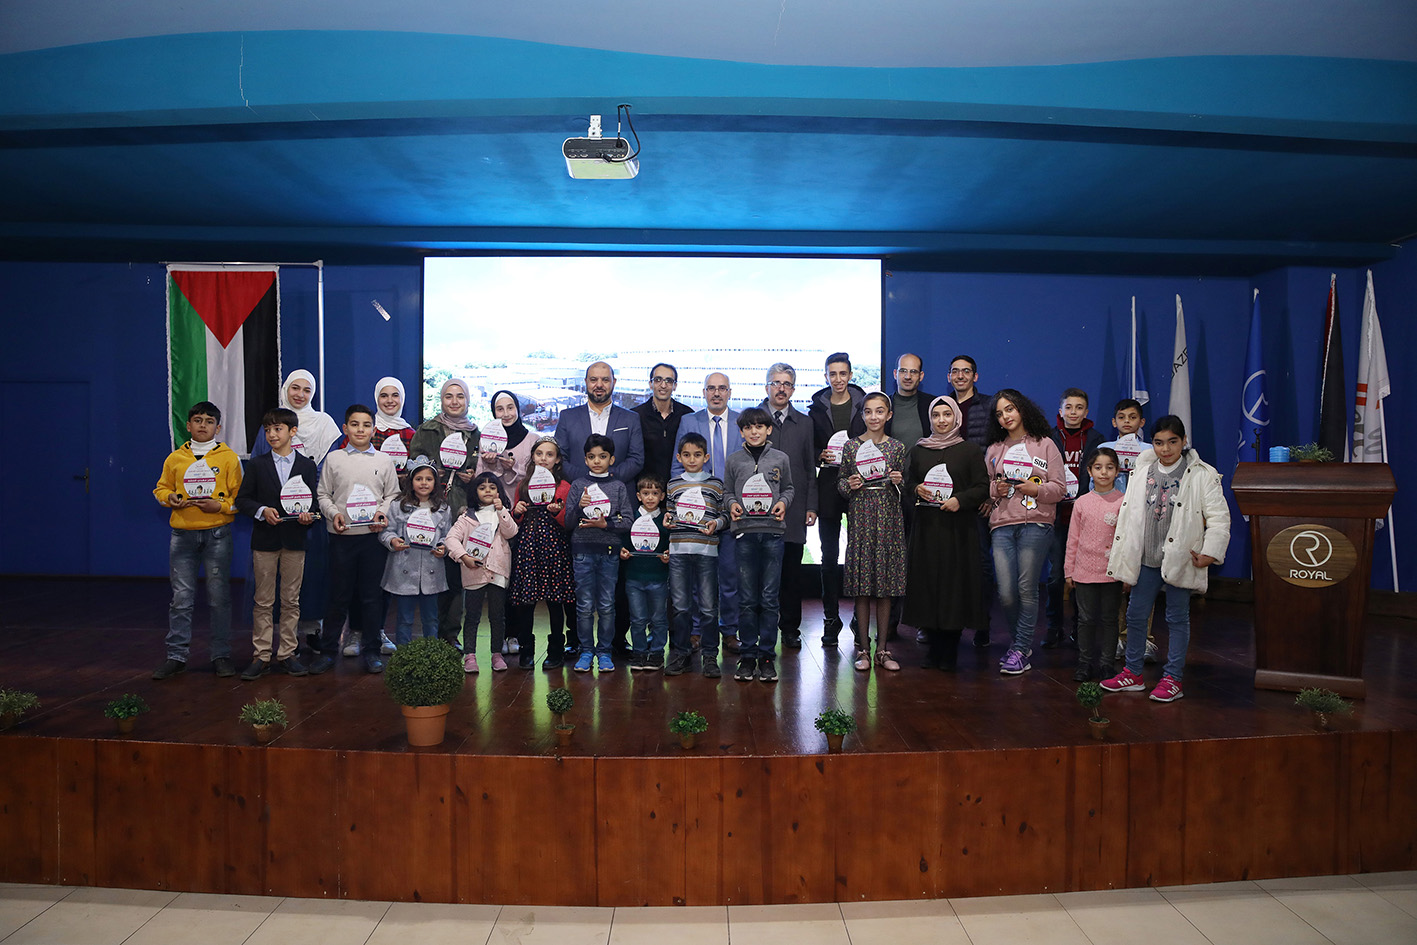 Royal hosts a ceremony honoring Palestine Chess Association